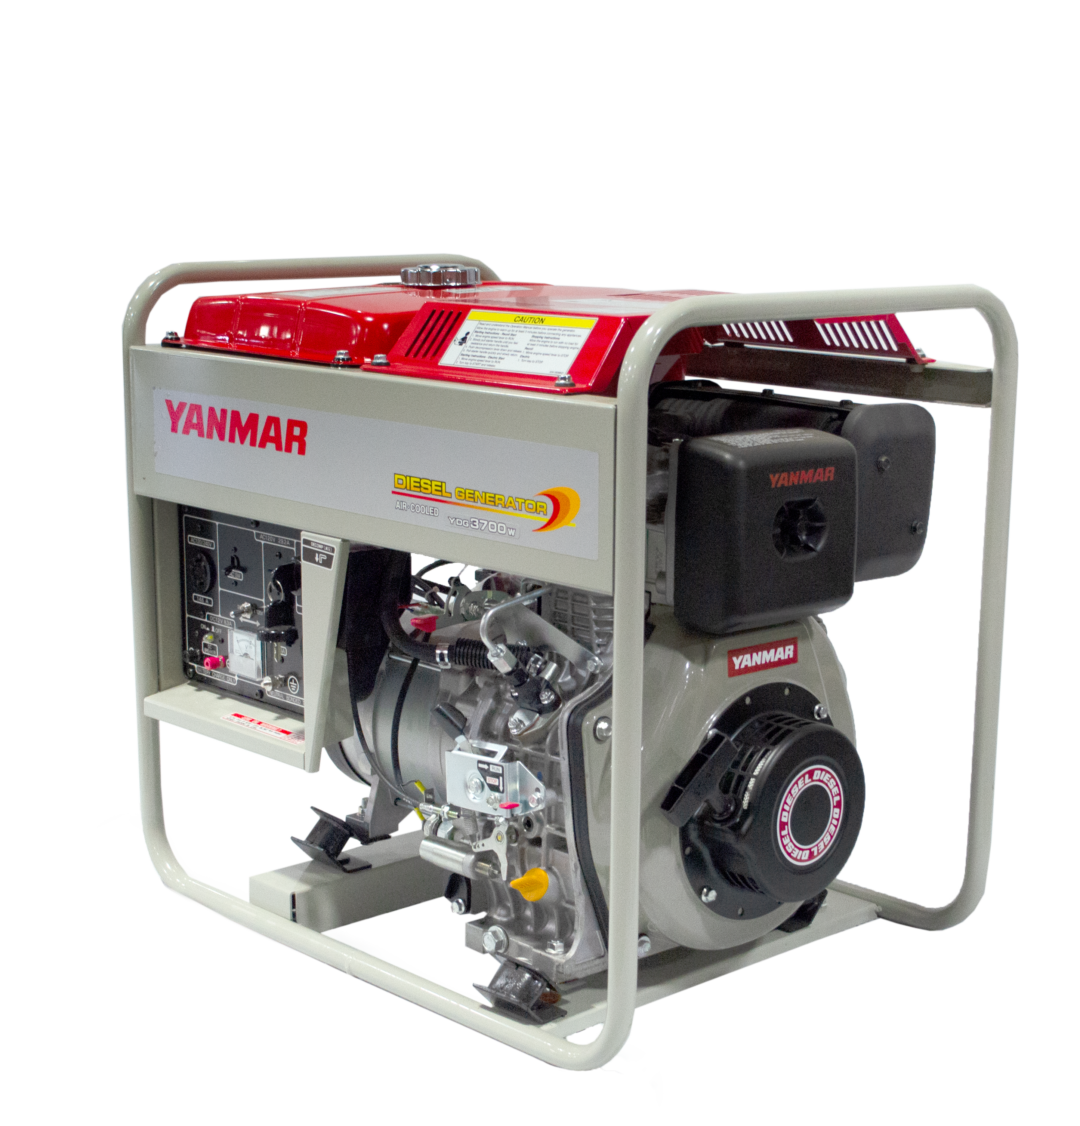 Yanmar YDG-W generator